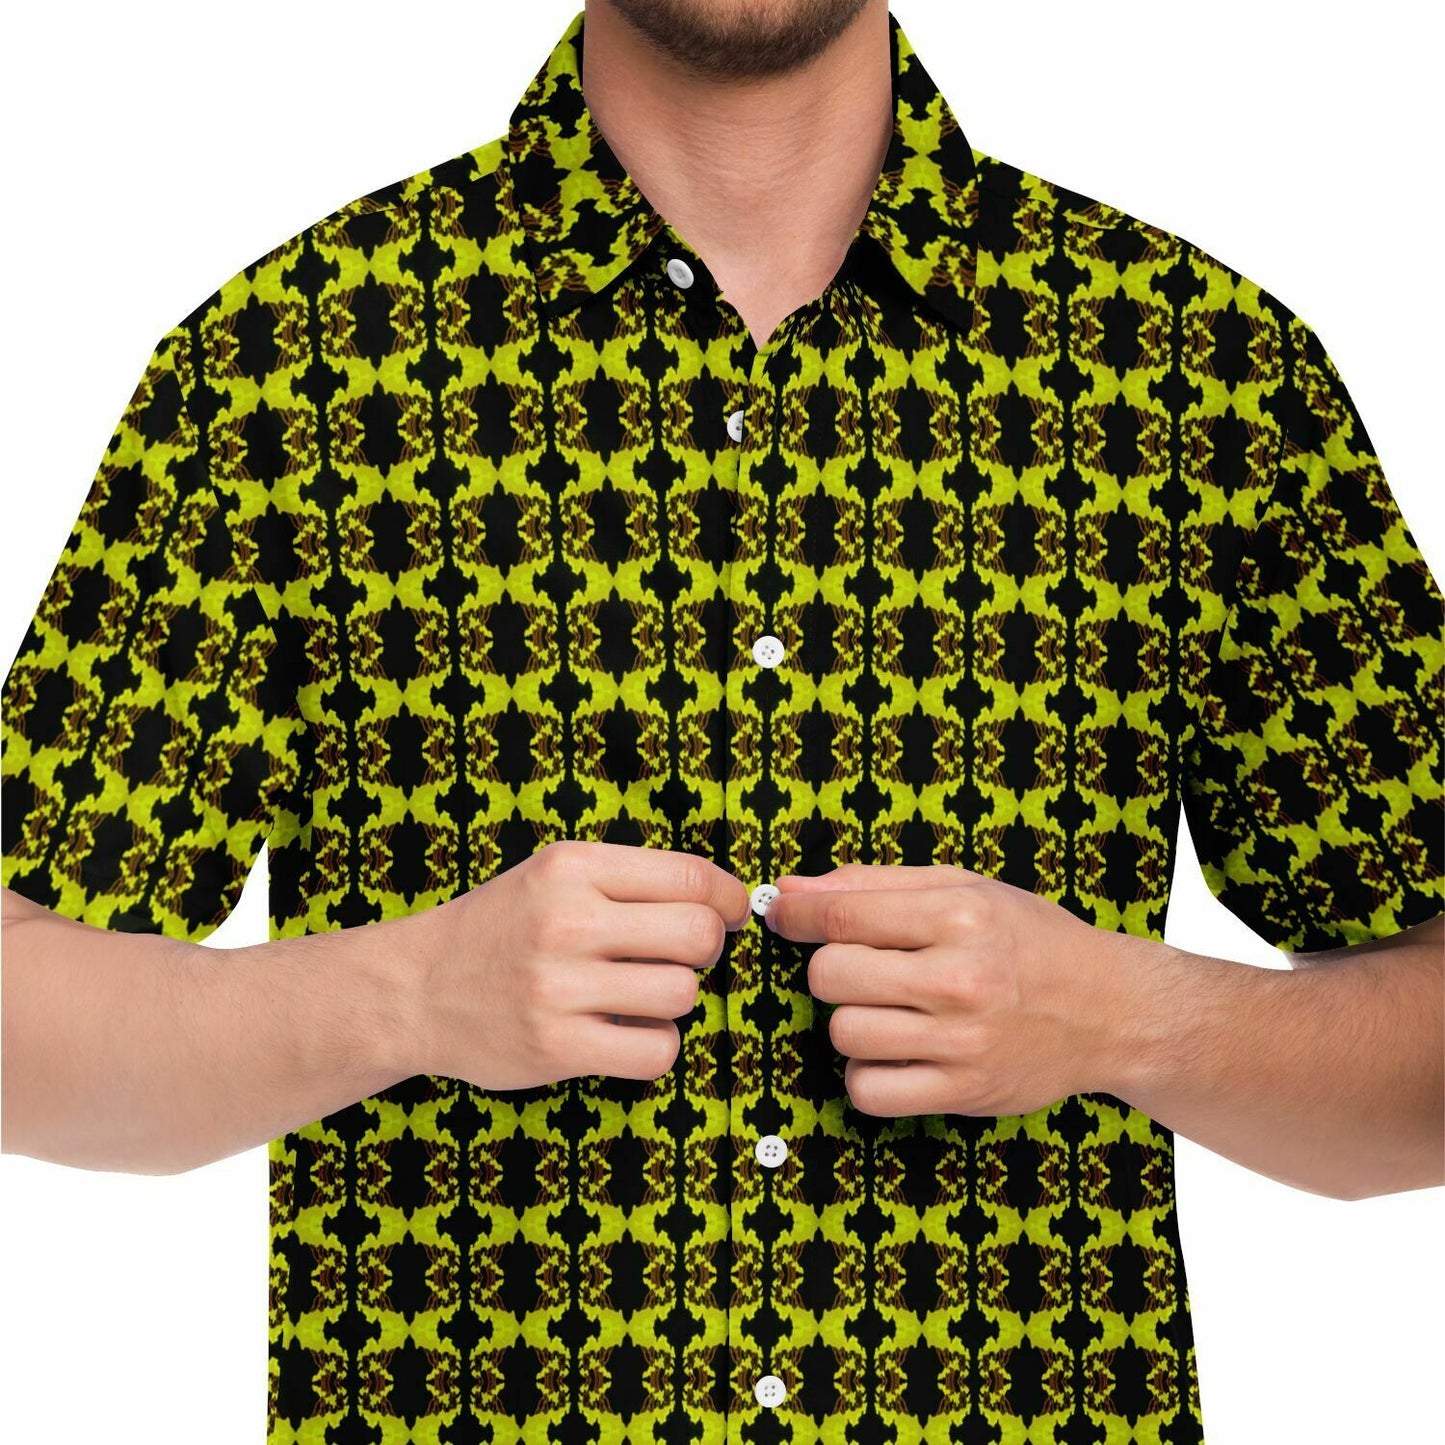 Short Sleeve Button Down Shirt (Neon Trees No. 2)